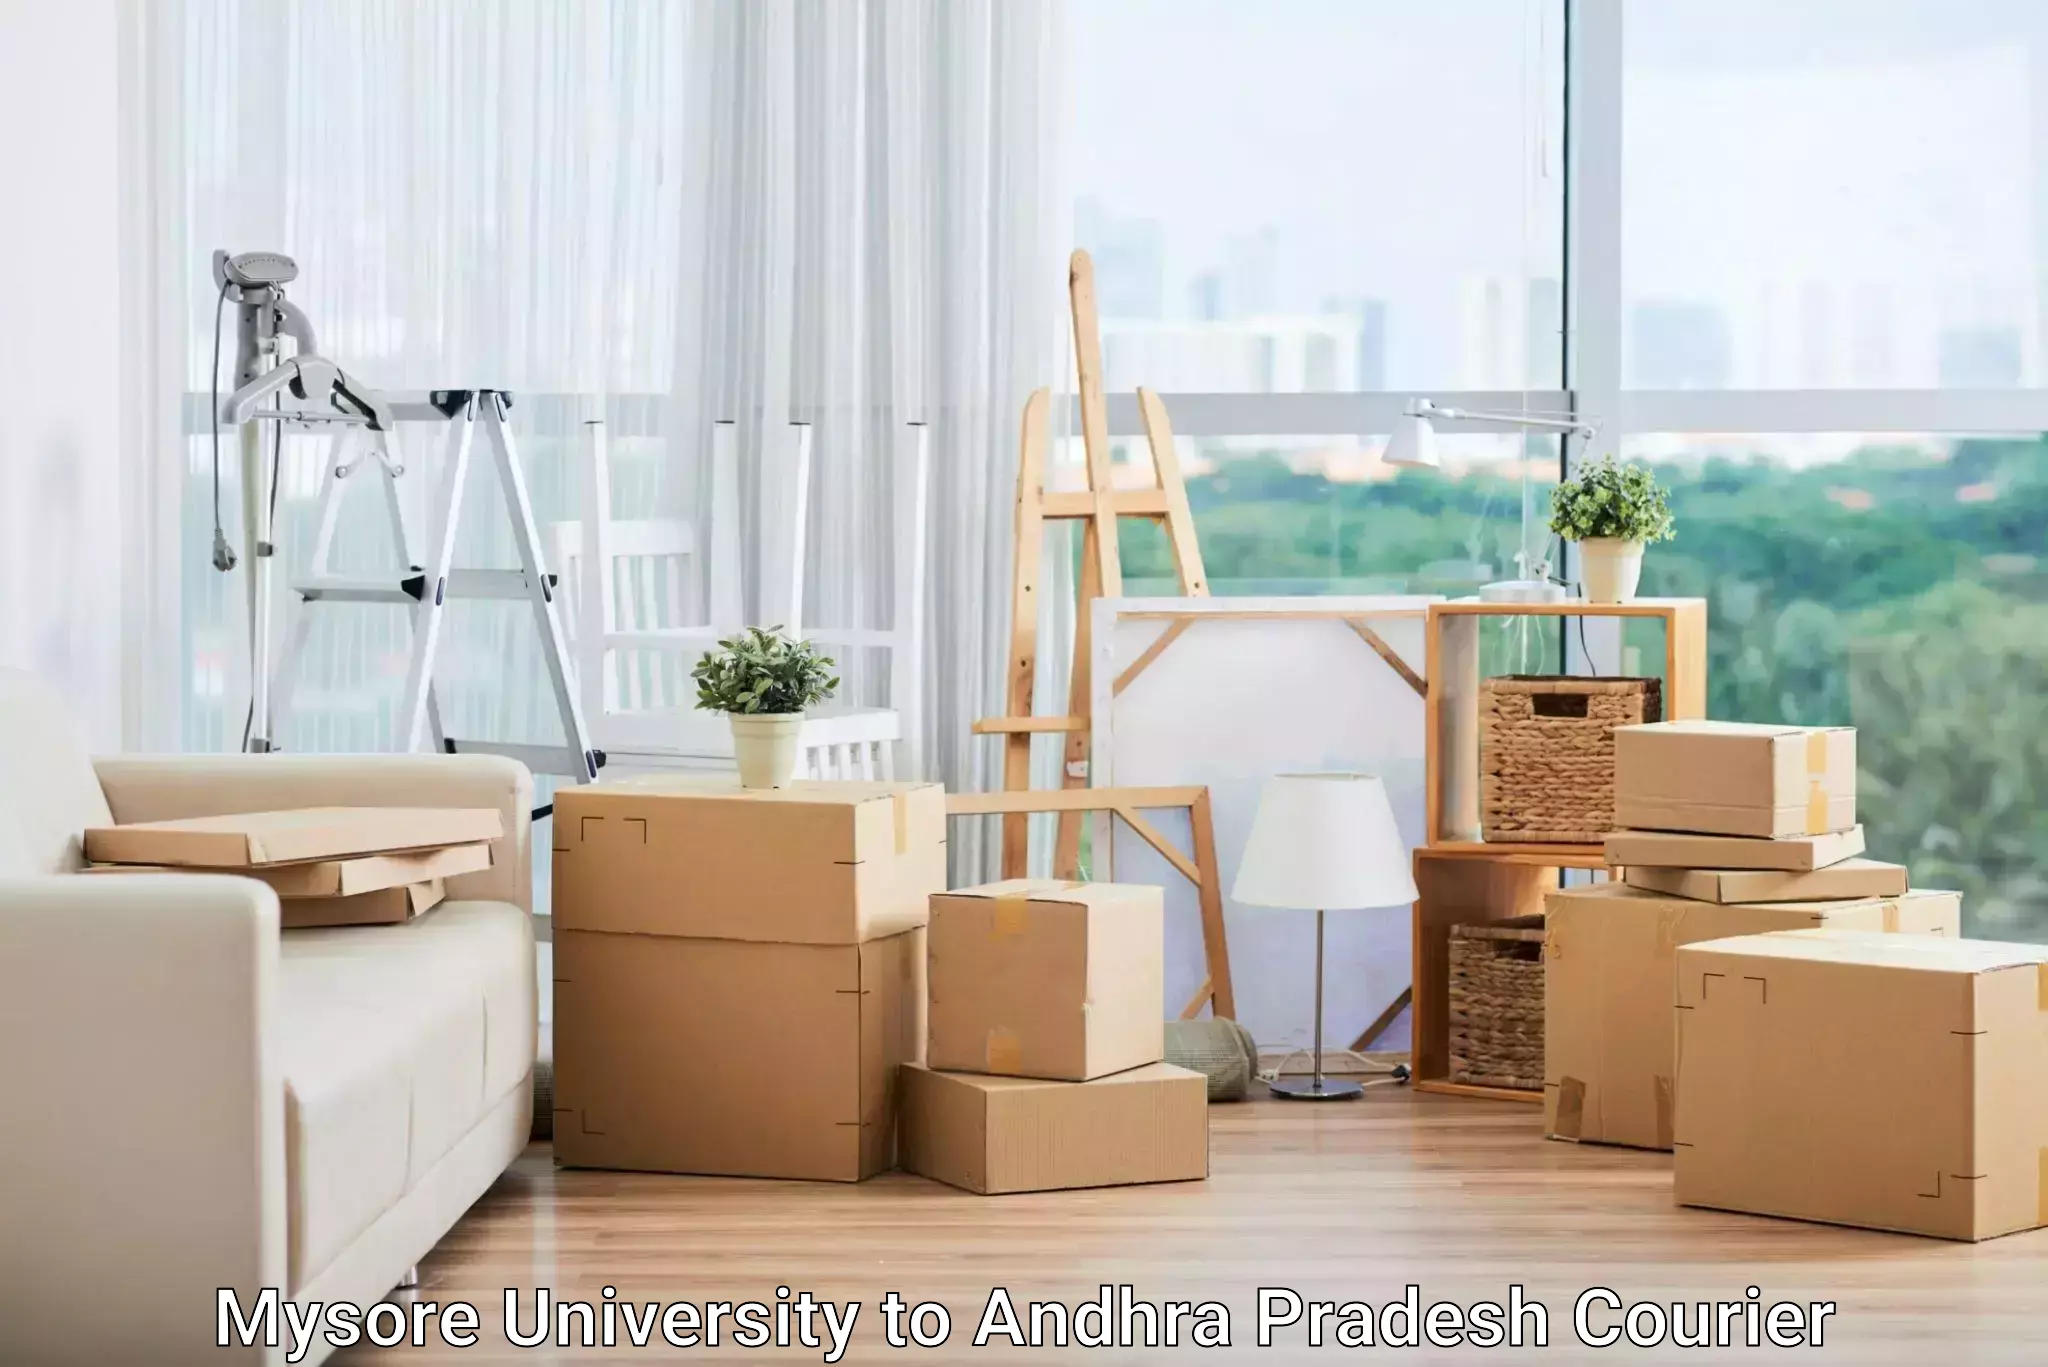 Reliable courier services Mysore University to Andhra Pradesh